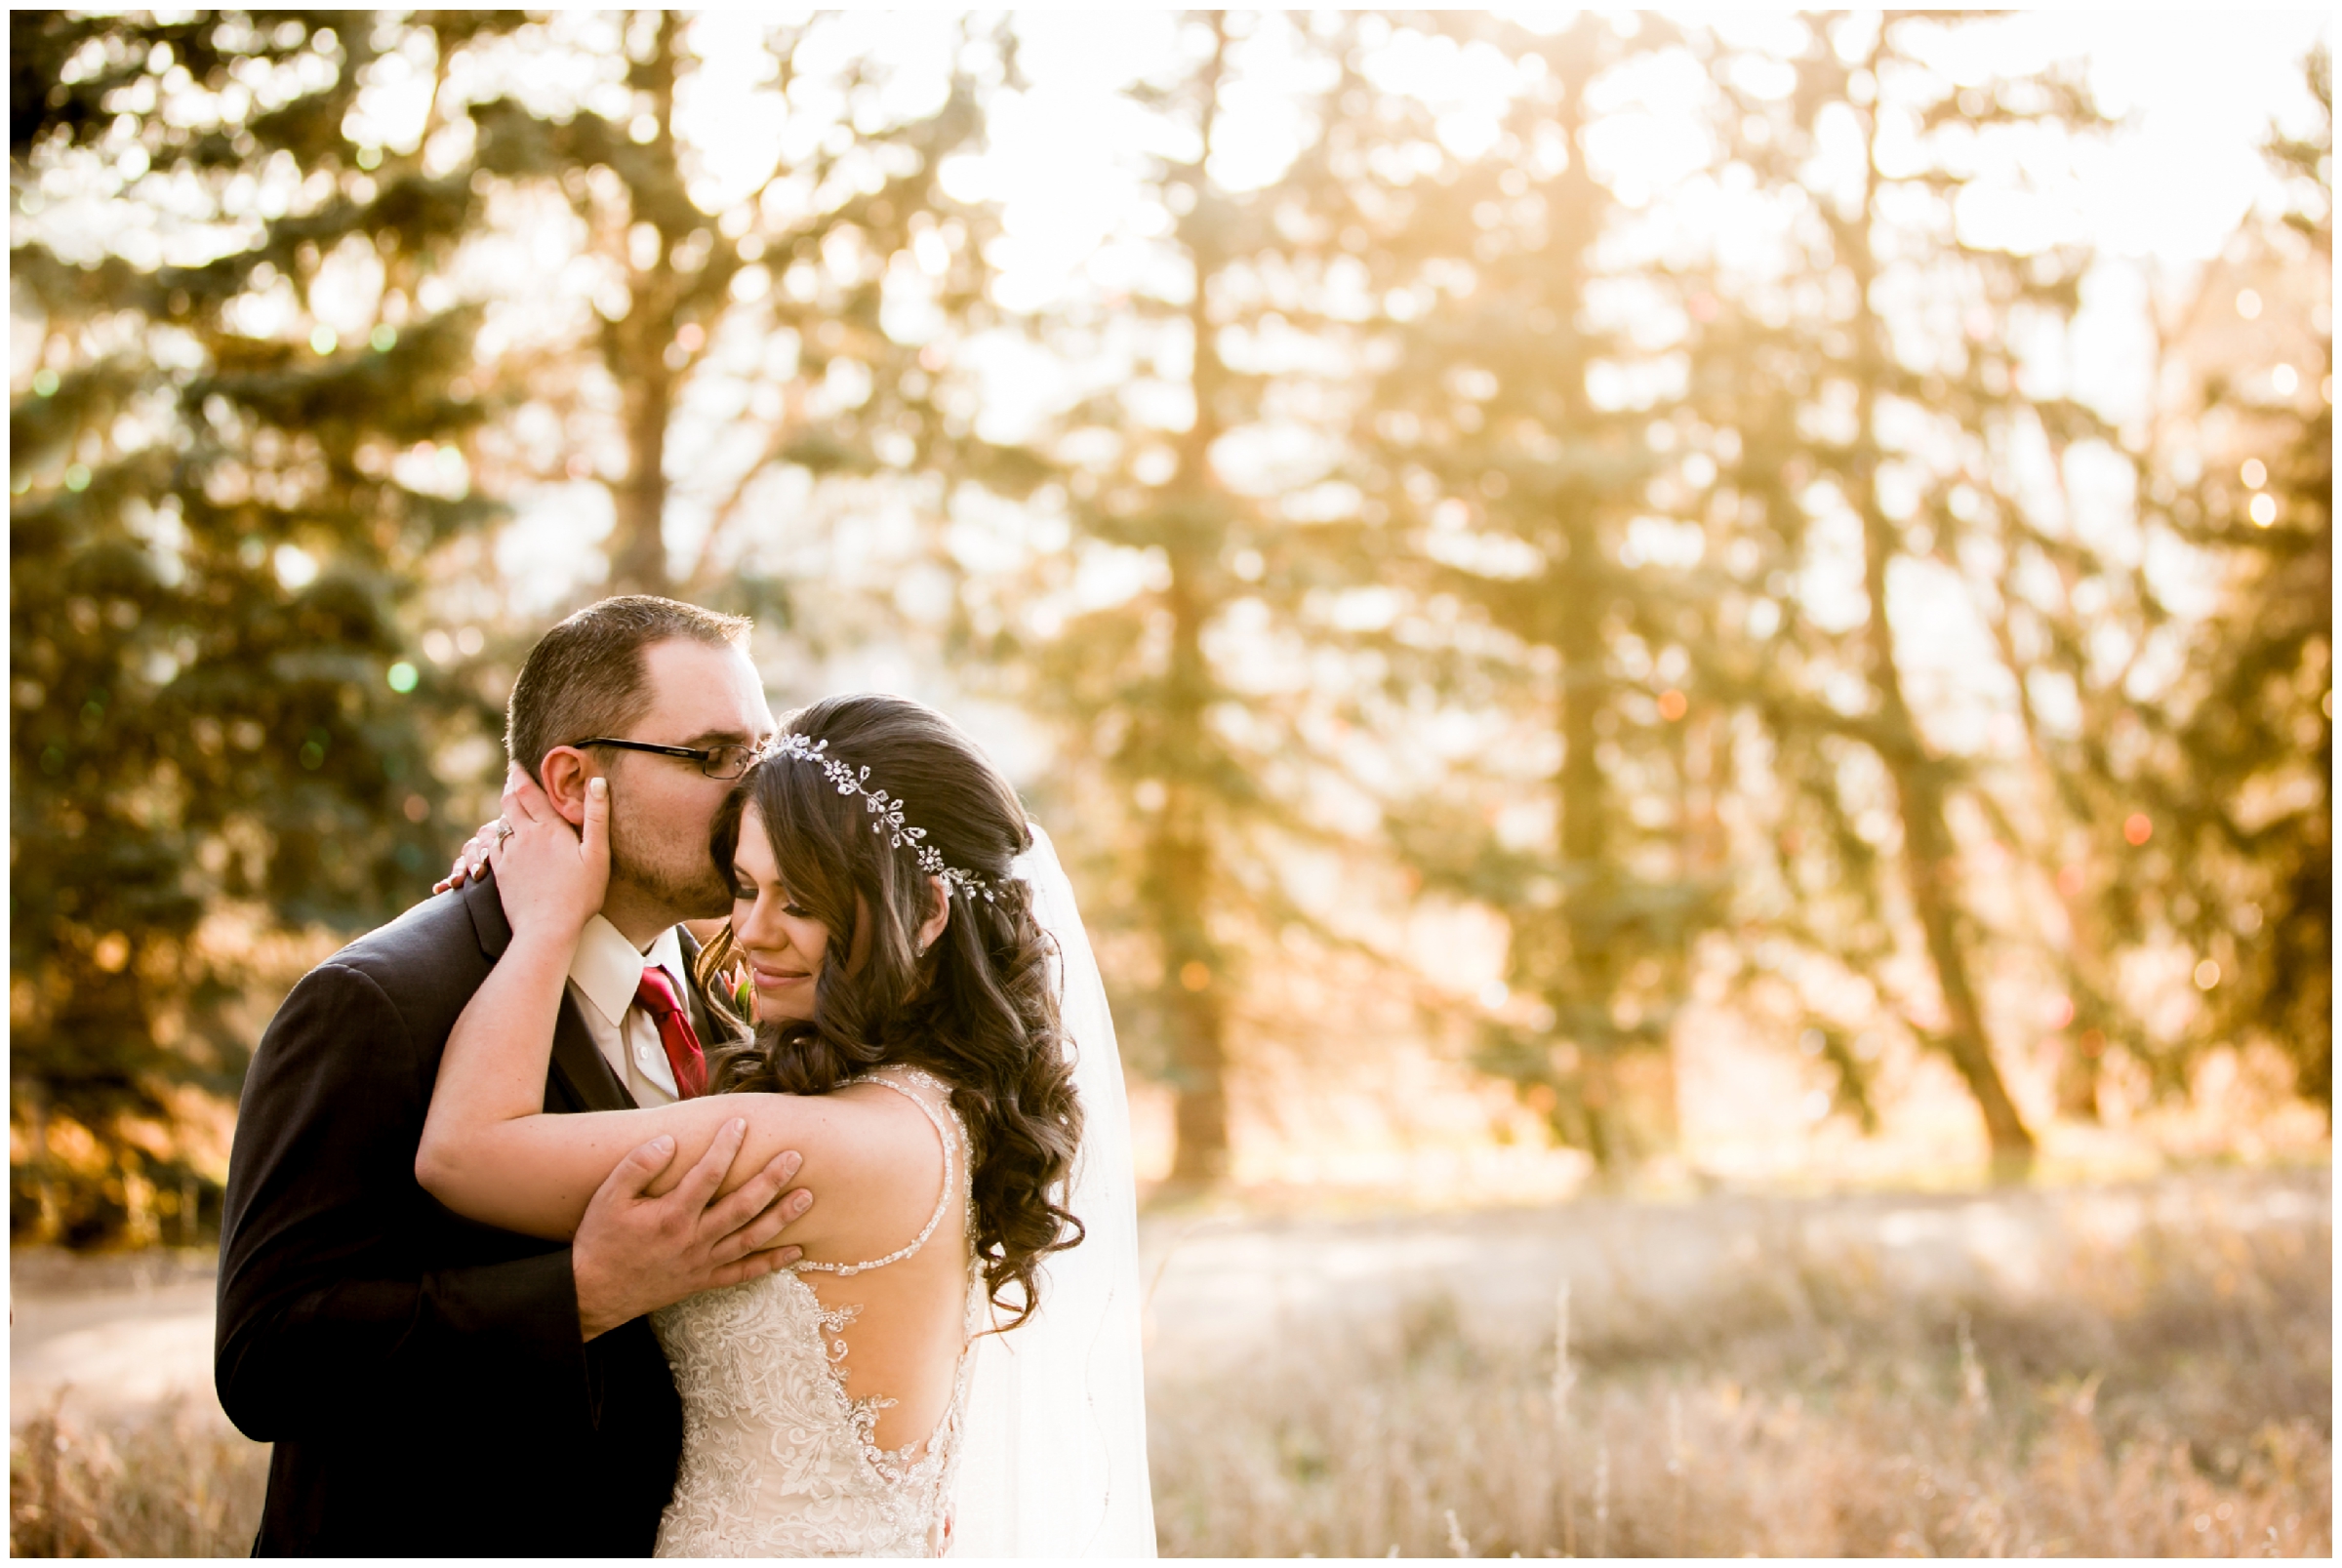 Chatfield Gardens wedding photos by Denver Colorado photographer Plum Pretty Photography